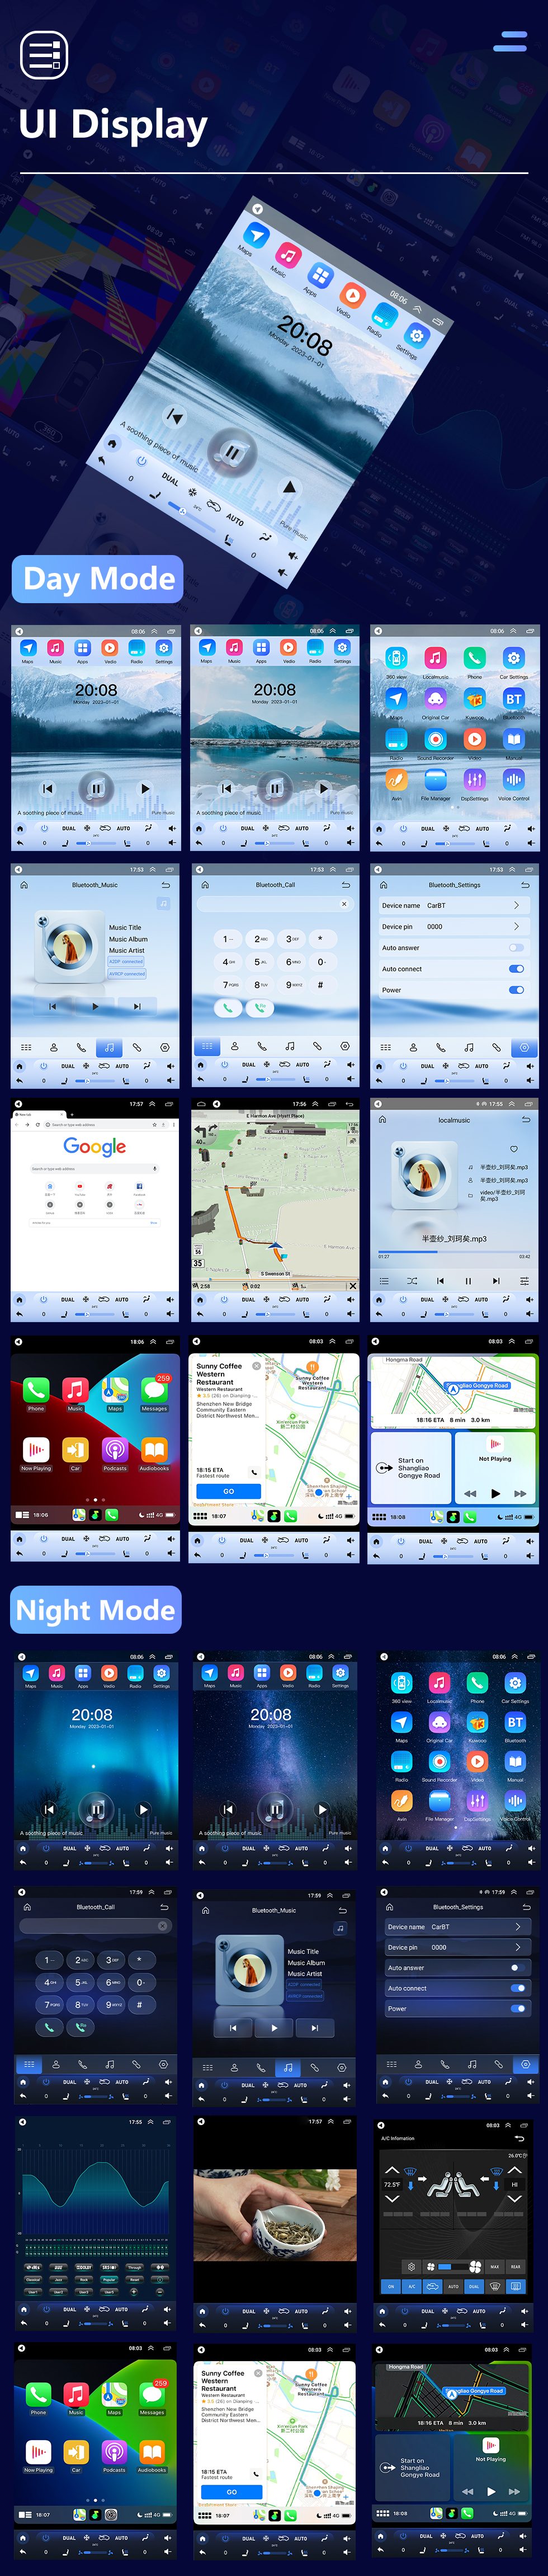 Seicane Carplay OEM 12,1 Zoll Android 10.0 für 2009 2010 2011–2013 Ford F150 Radio Android Auto GPS Navigationssystem mit HD Touchscreen Bluetooth Unterstützung OBD2 DVR